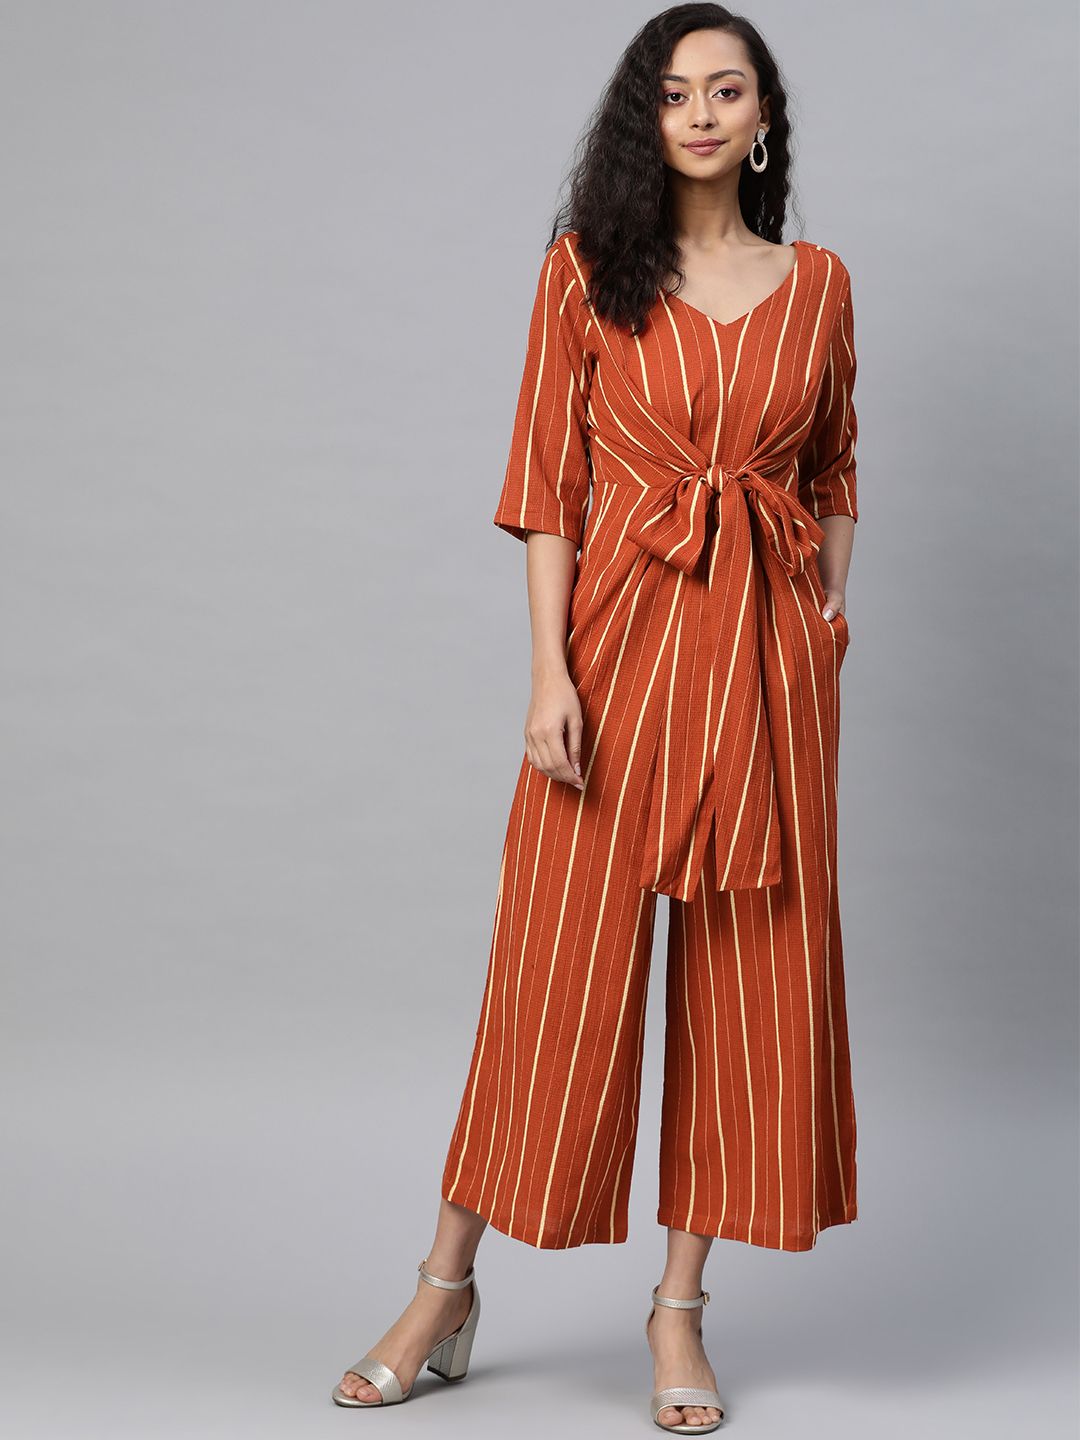 SILVER STOCK Women Rust & Cream-Coloured Striped Culotte Jumpsuit Price in India